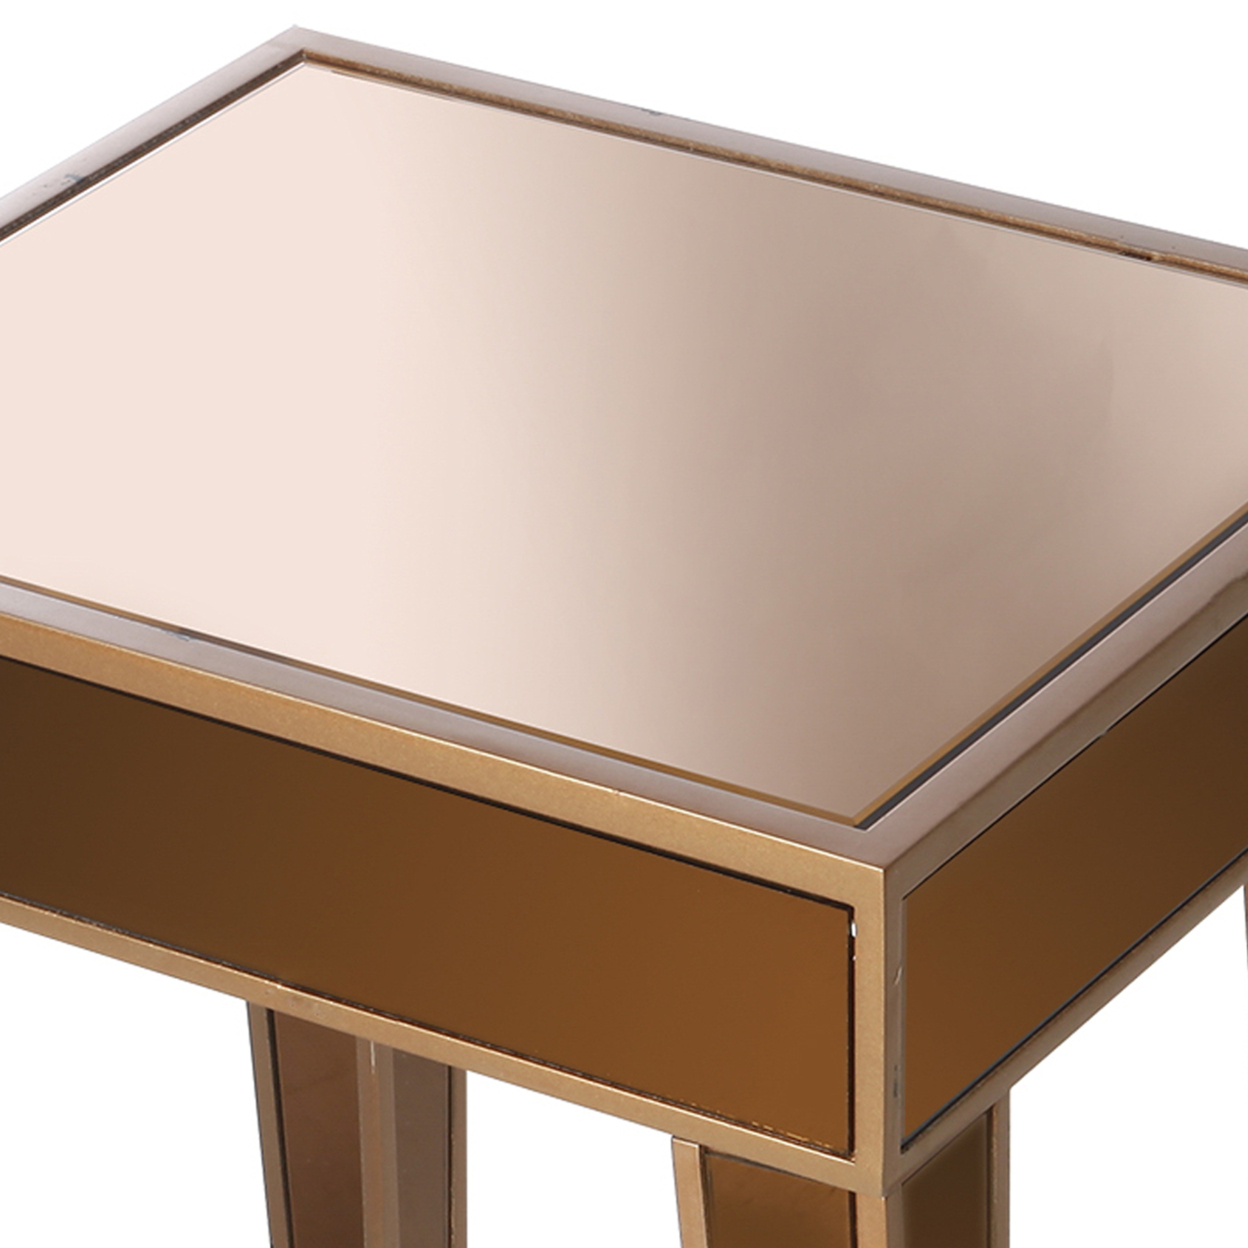 21, 17 Inch Side End Table, Mirror Tops, Wood Frames, Set Of 2, Brown- Saltoro Sherpi